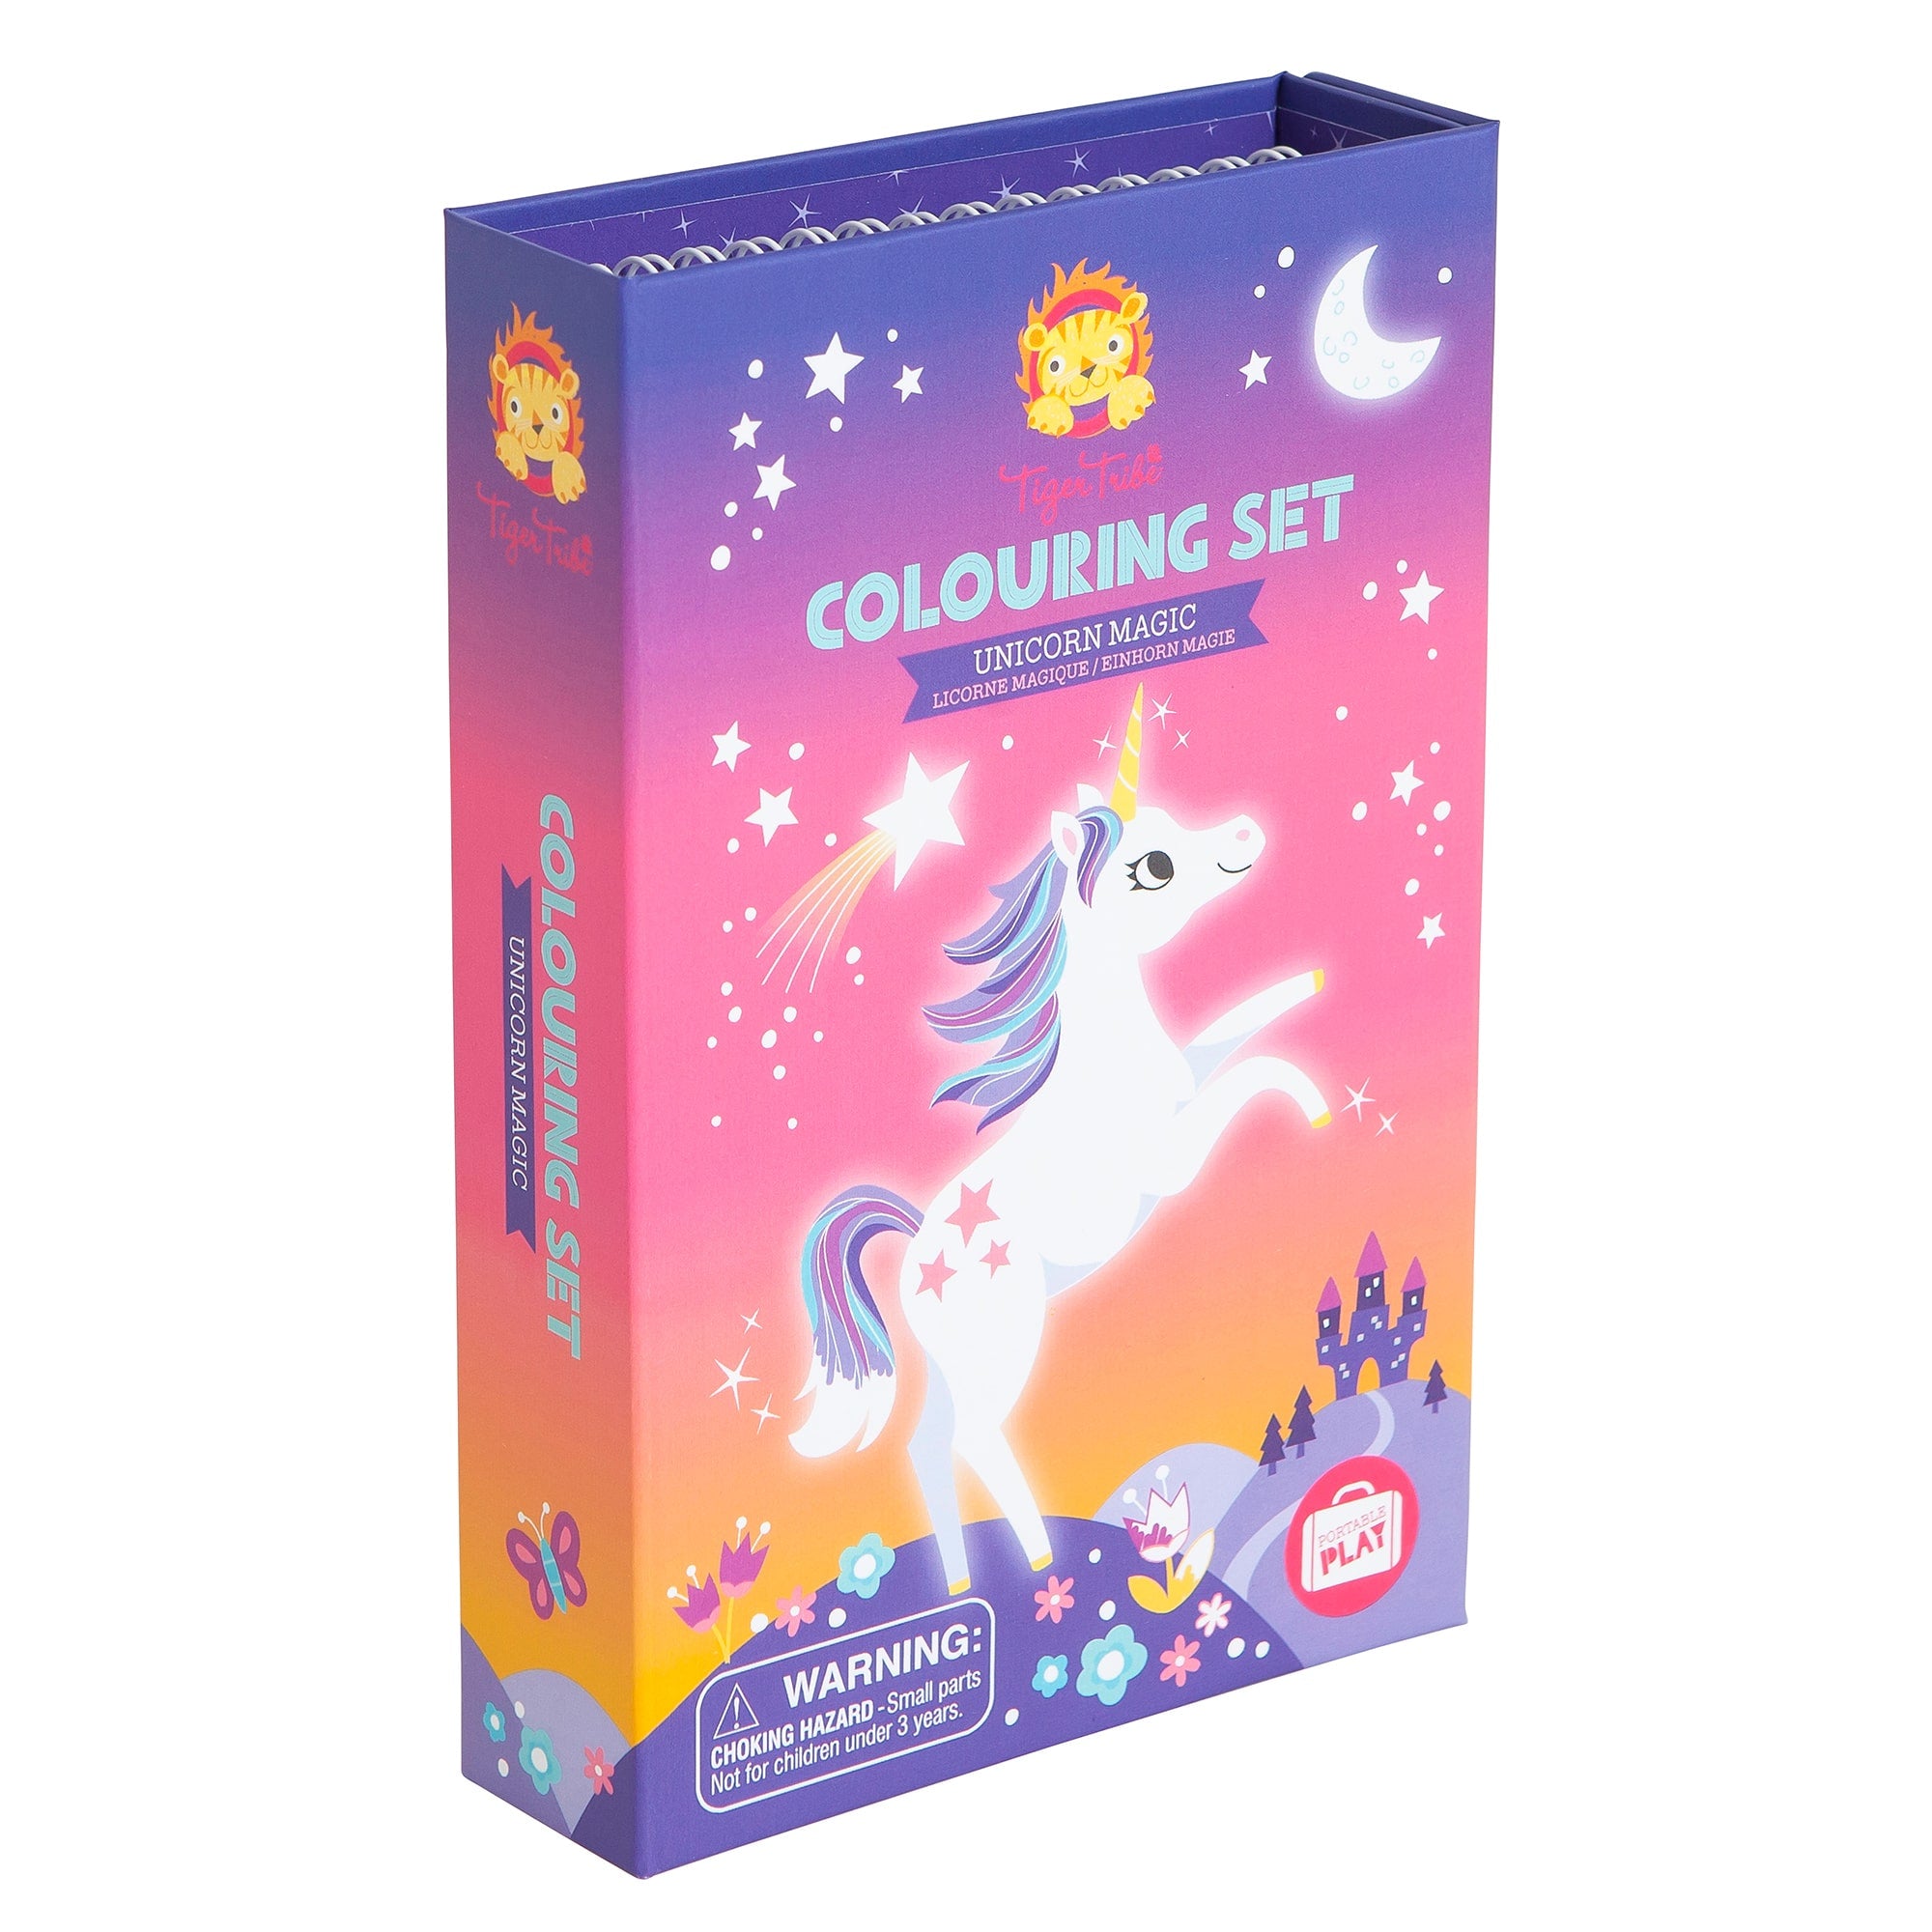 Colouring Set: Unicorn Magic - Ages 3+